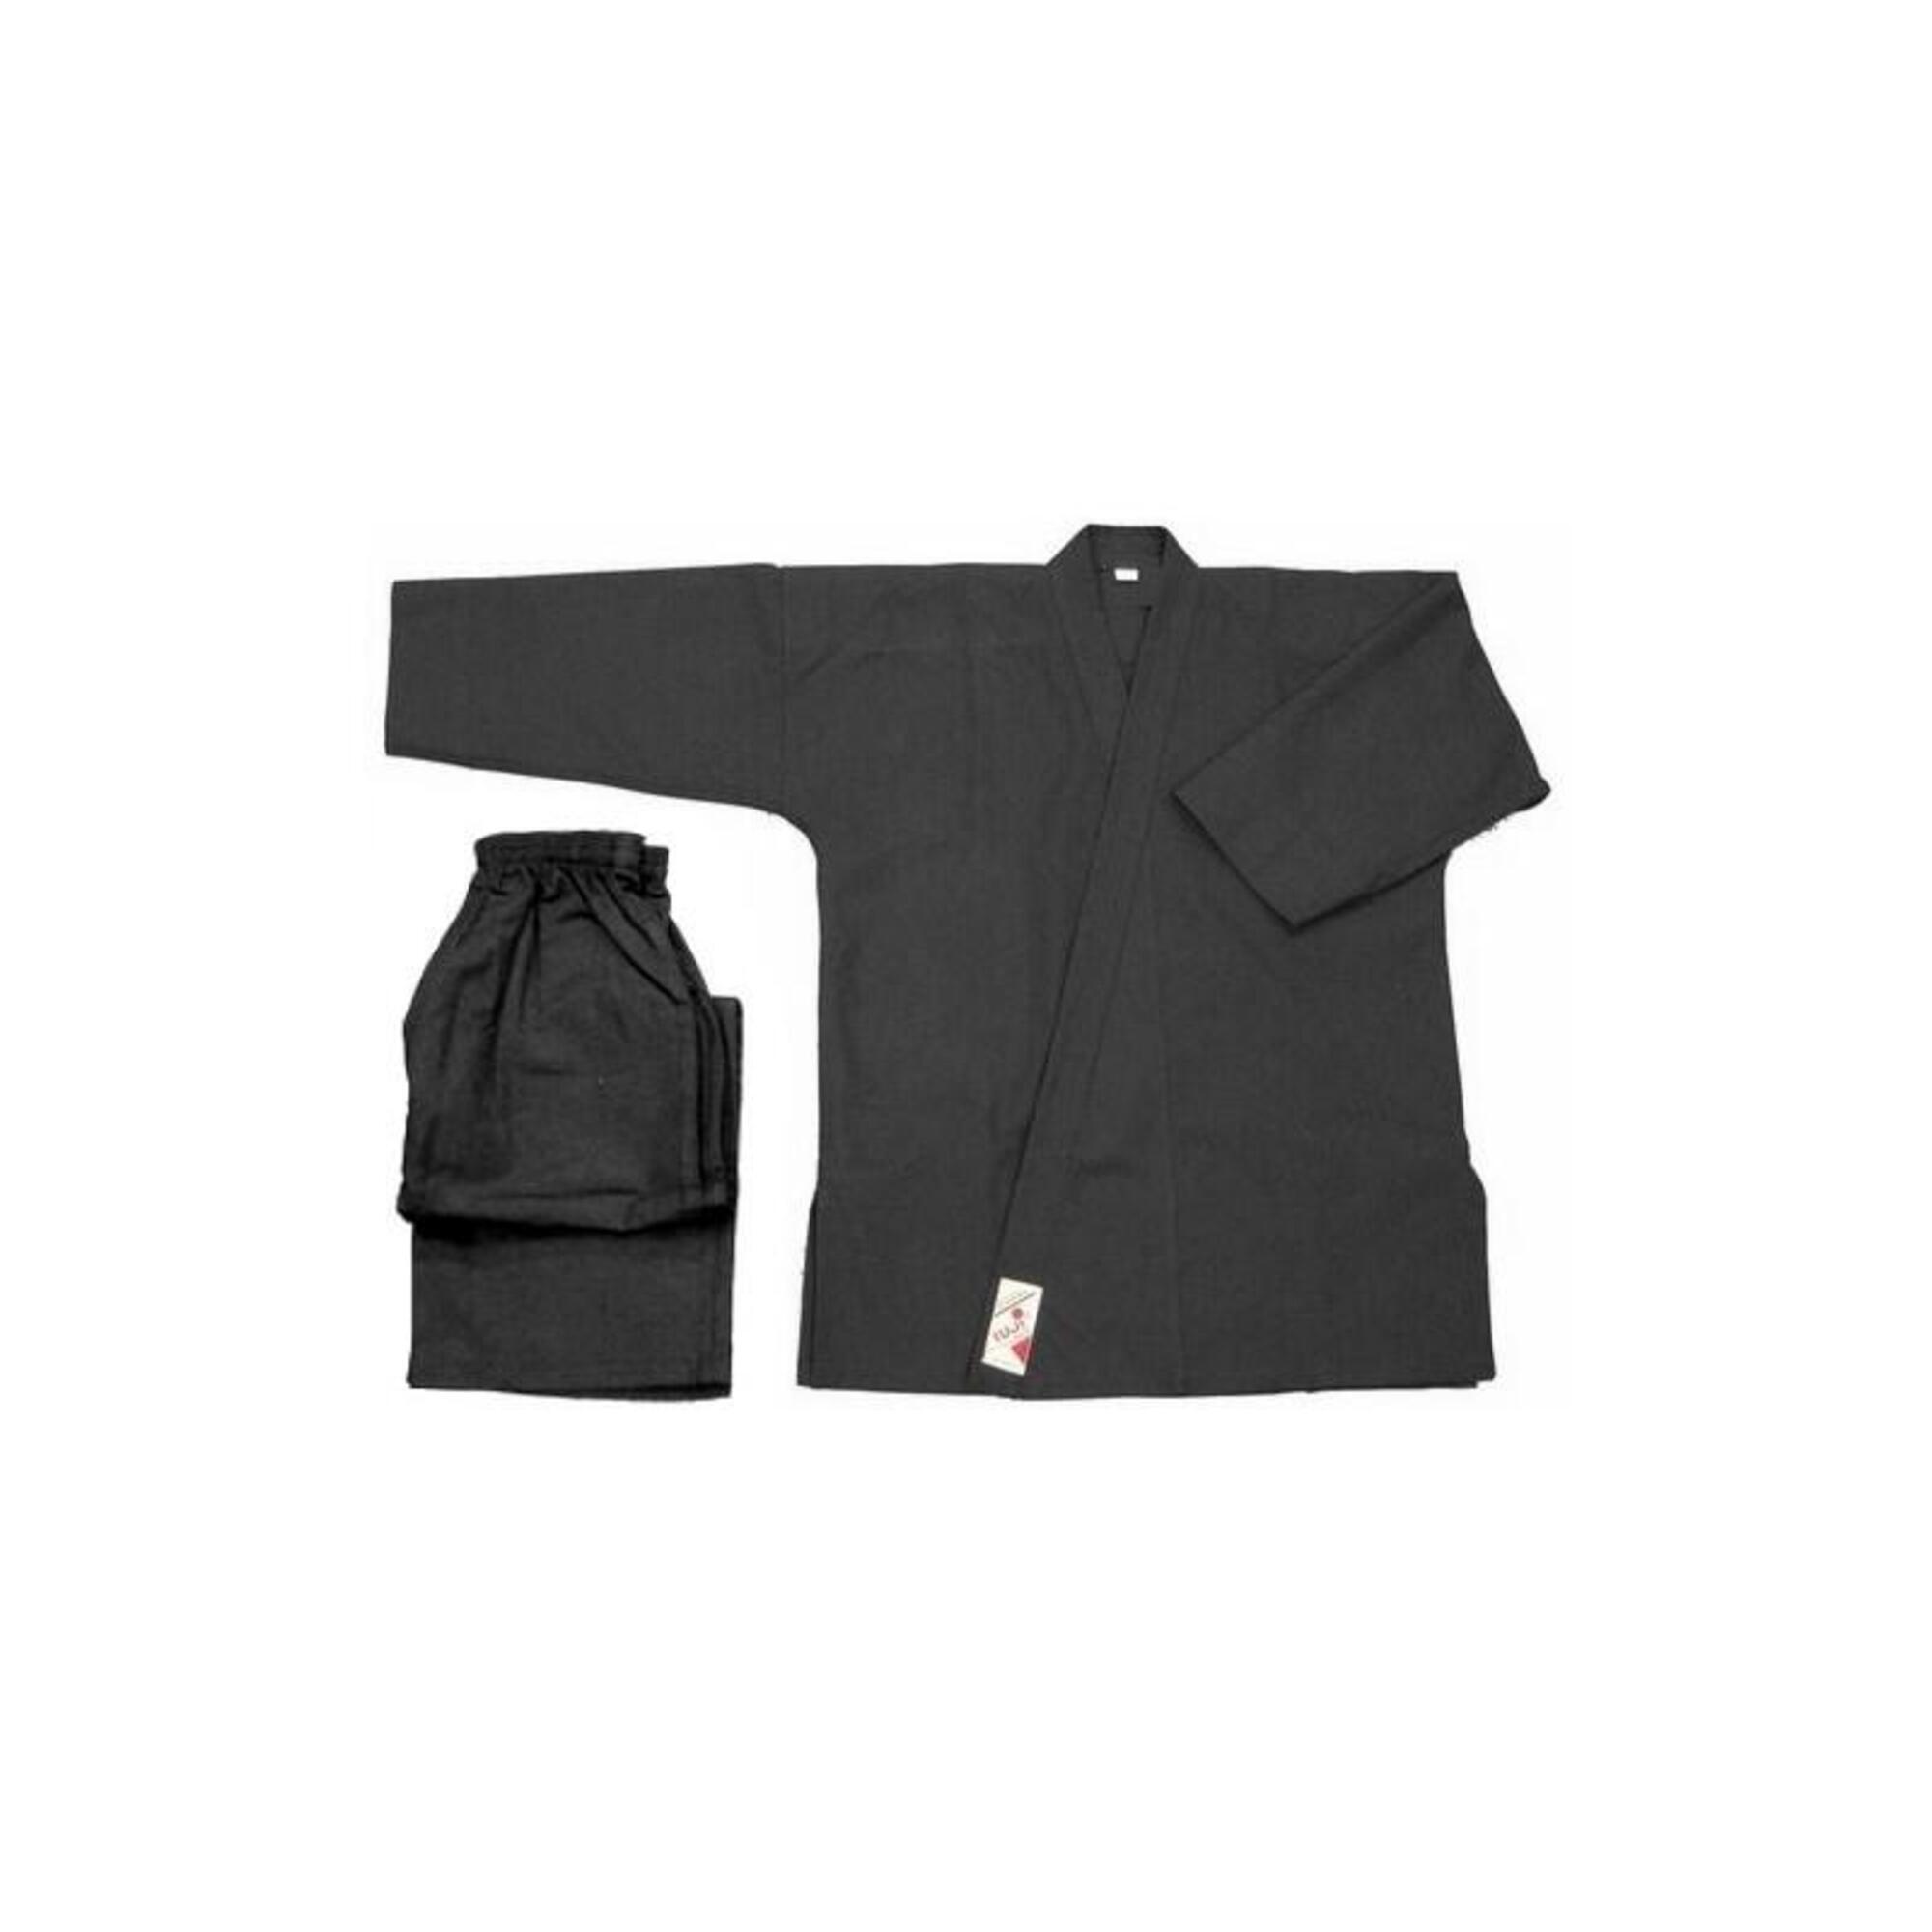 Kimono preto - Fato Vo phuc preto algodão 8 oz